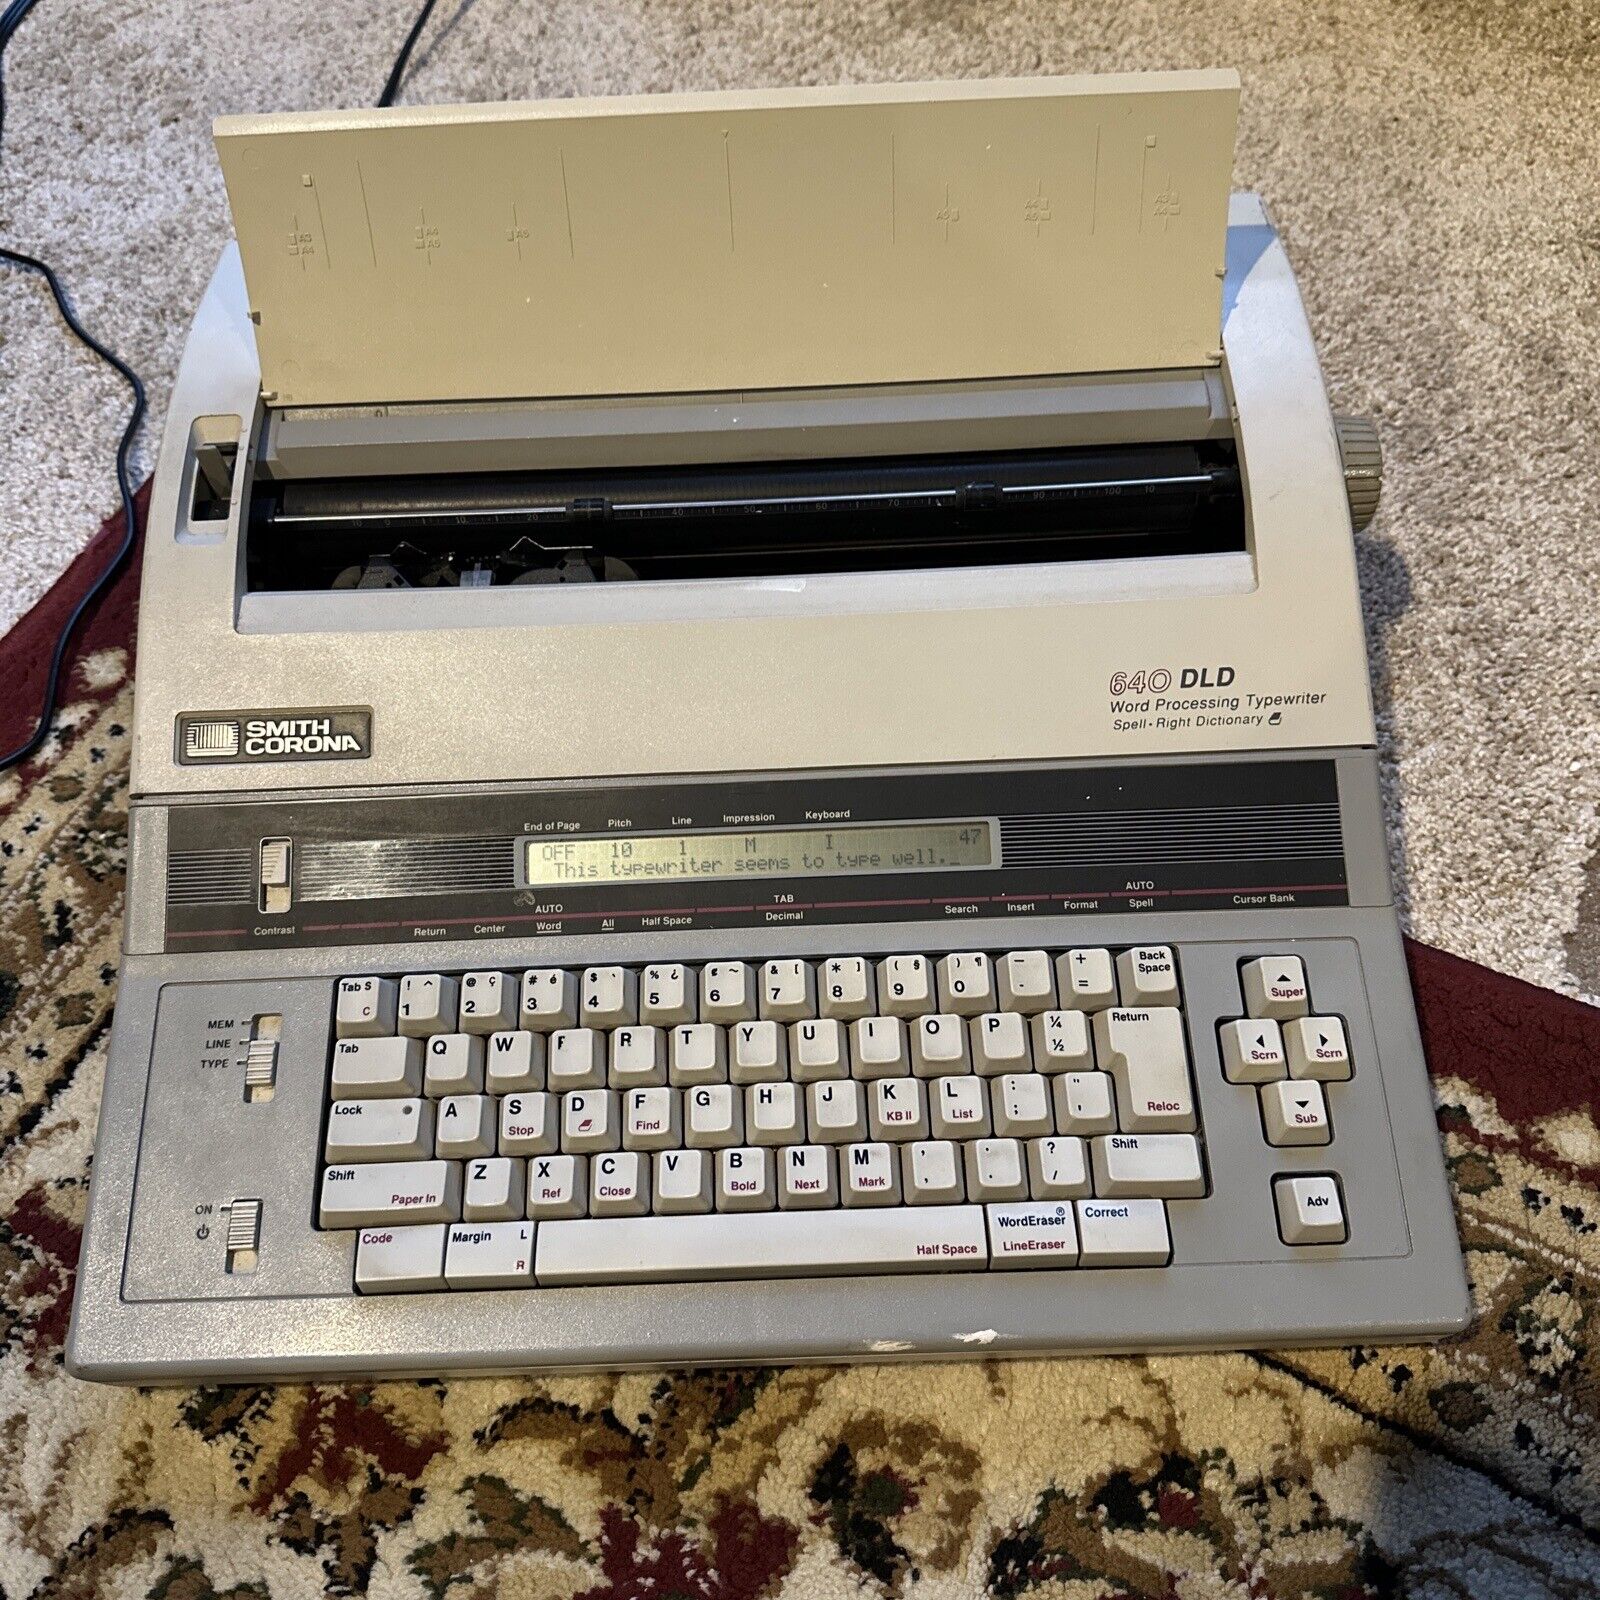 Smith Corona Word Processing Typewriter 640 DLD